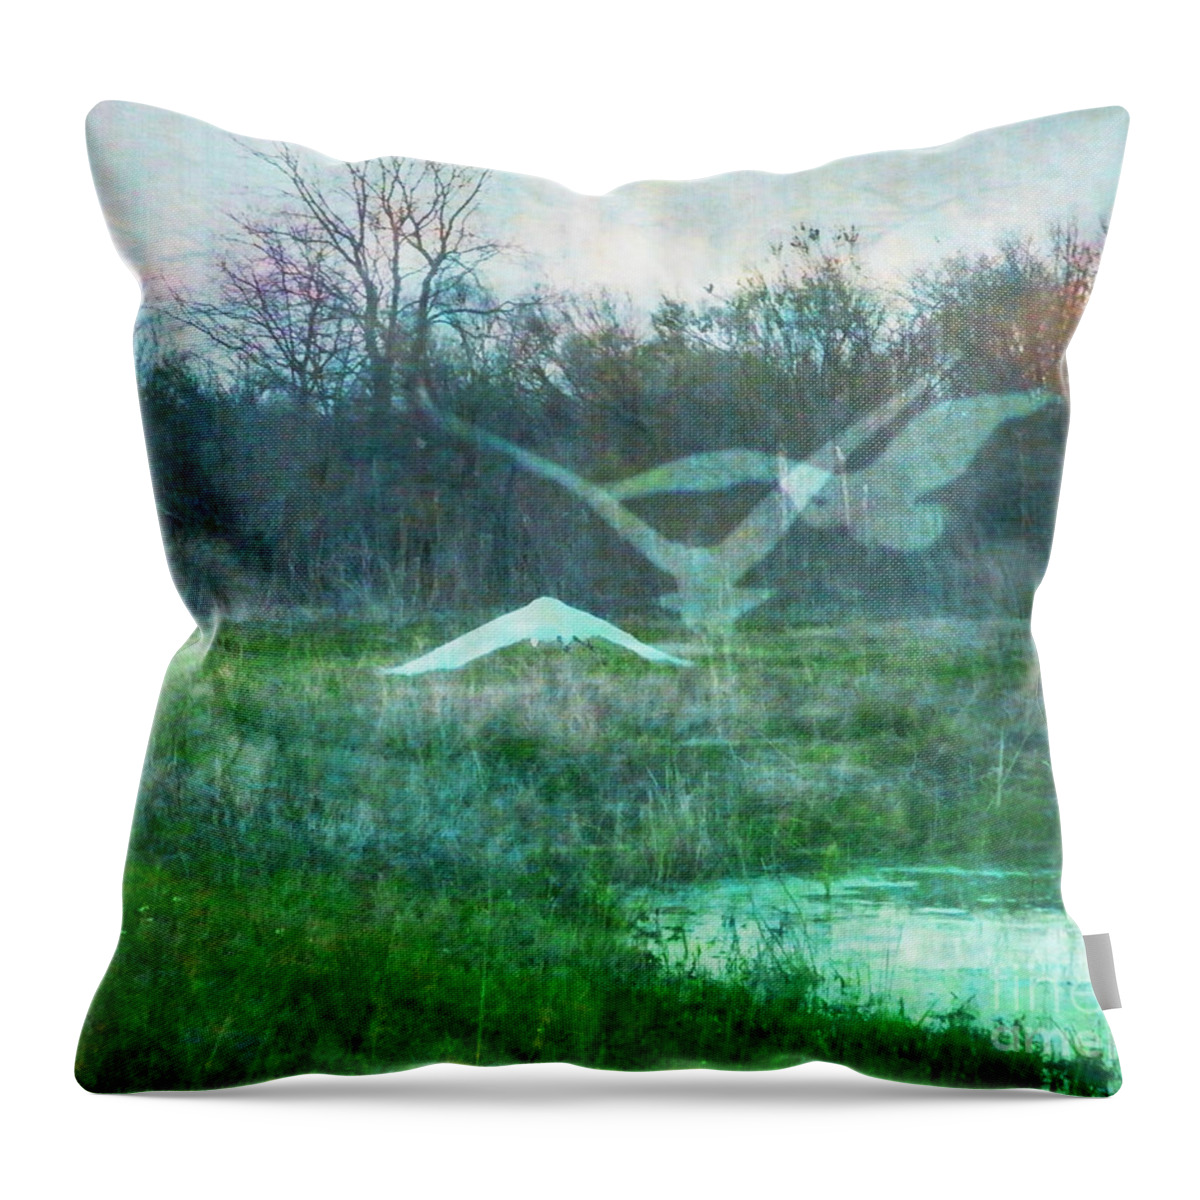 Egret Throw Pillow featuring the digital art Egret in Retreat by Lizi Beard-Ward